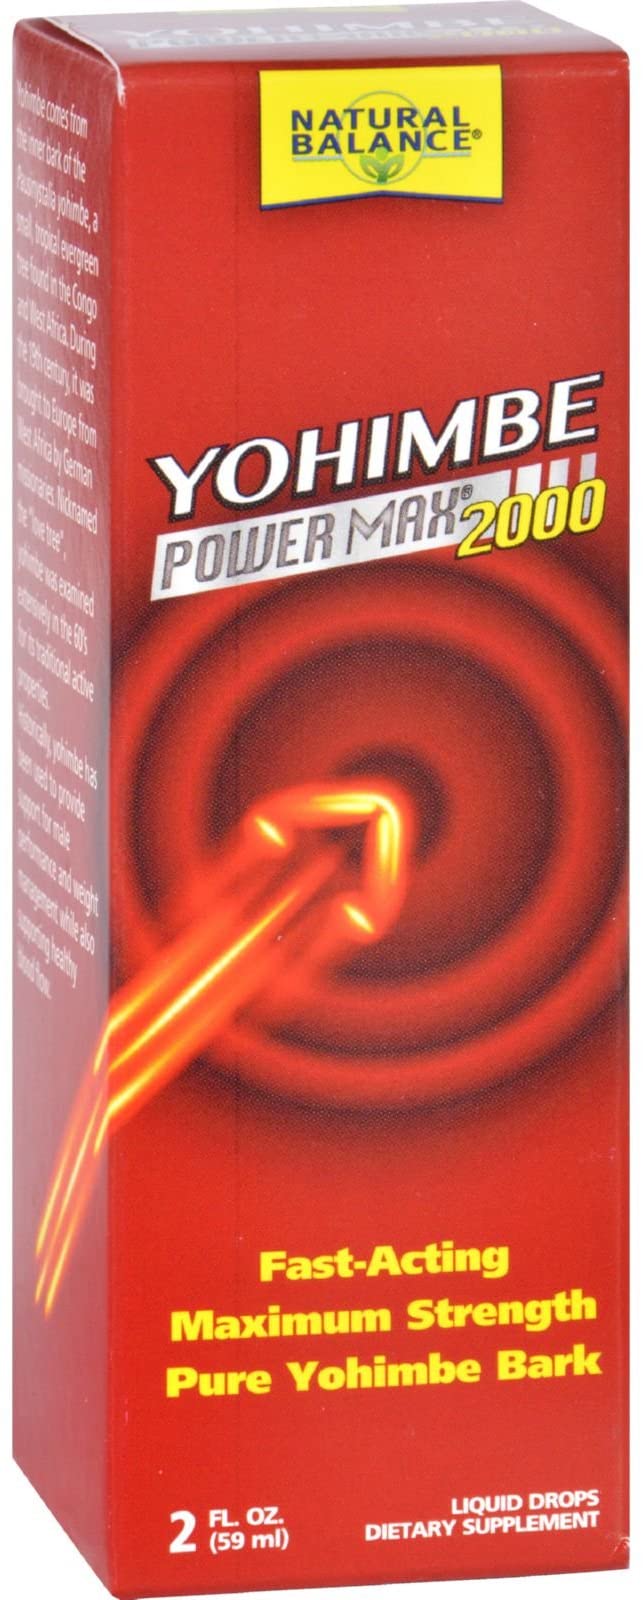 Yohimbe Power Max 2000, 0.15 Pound